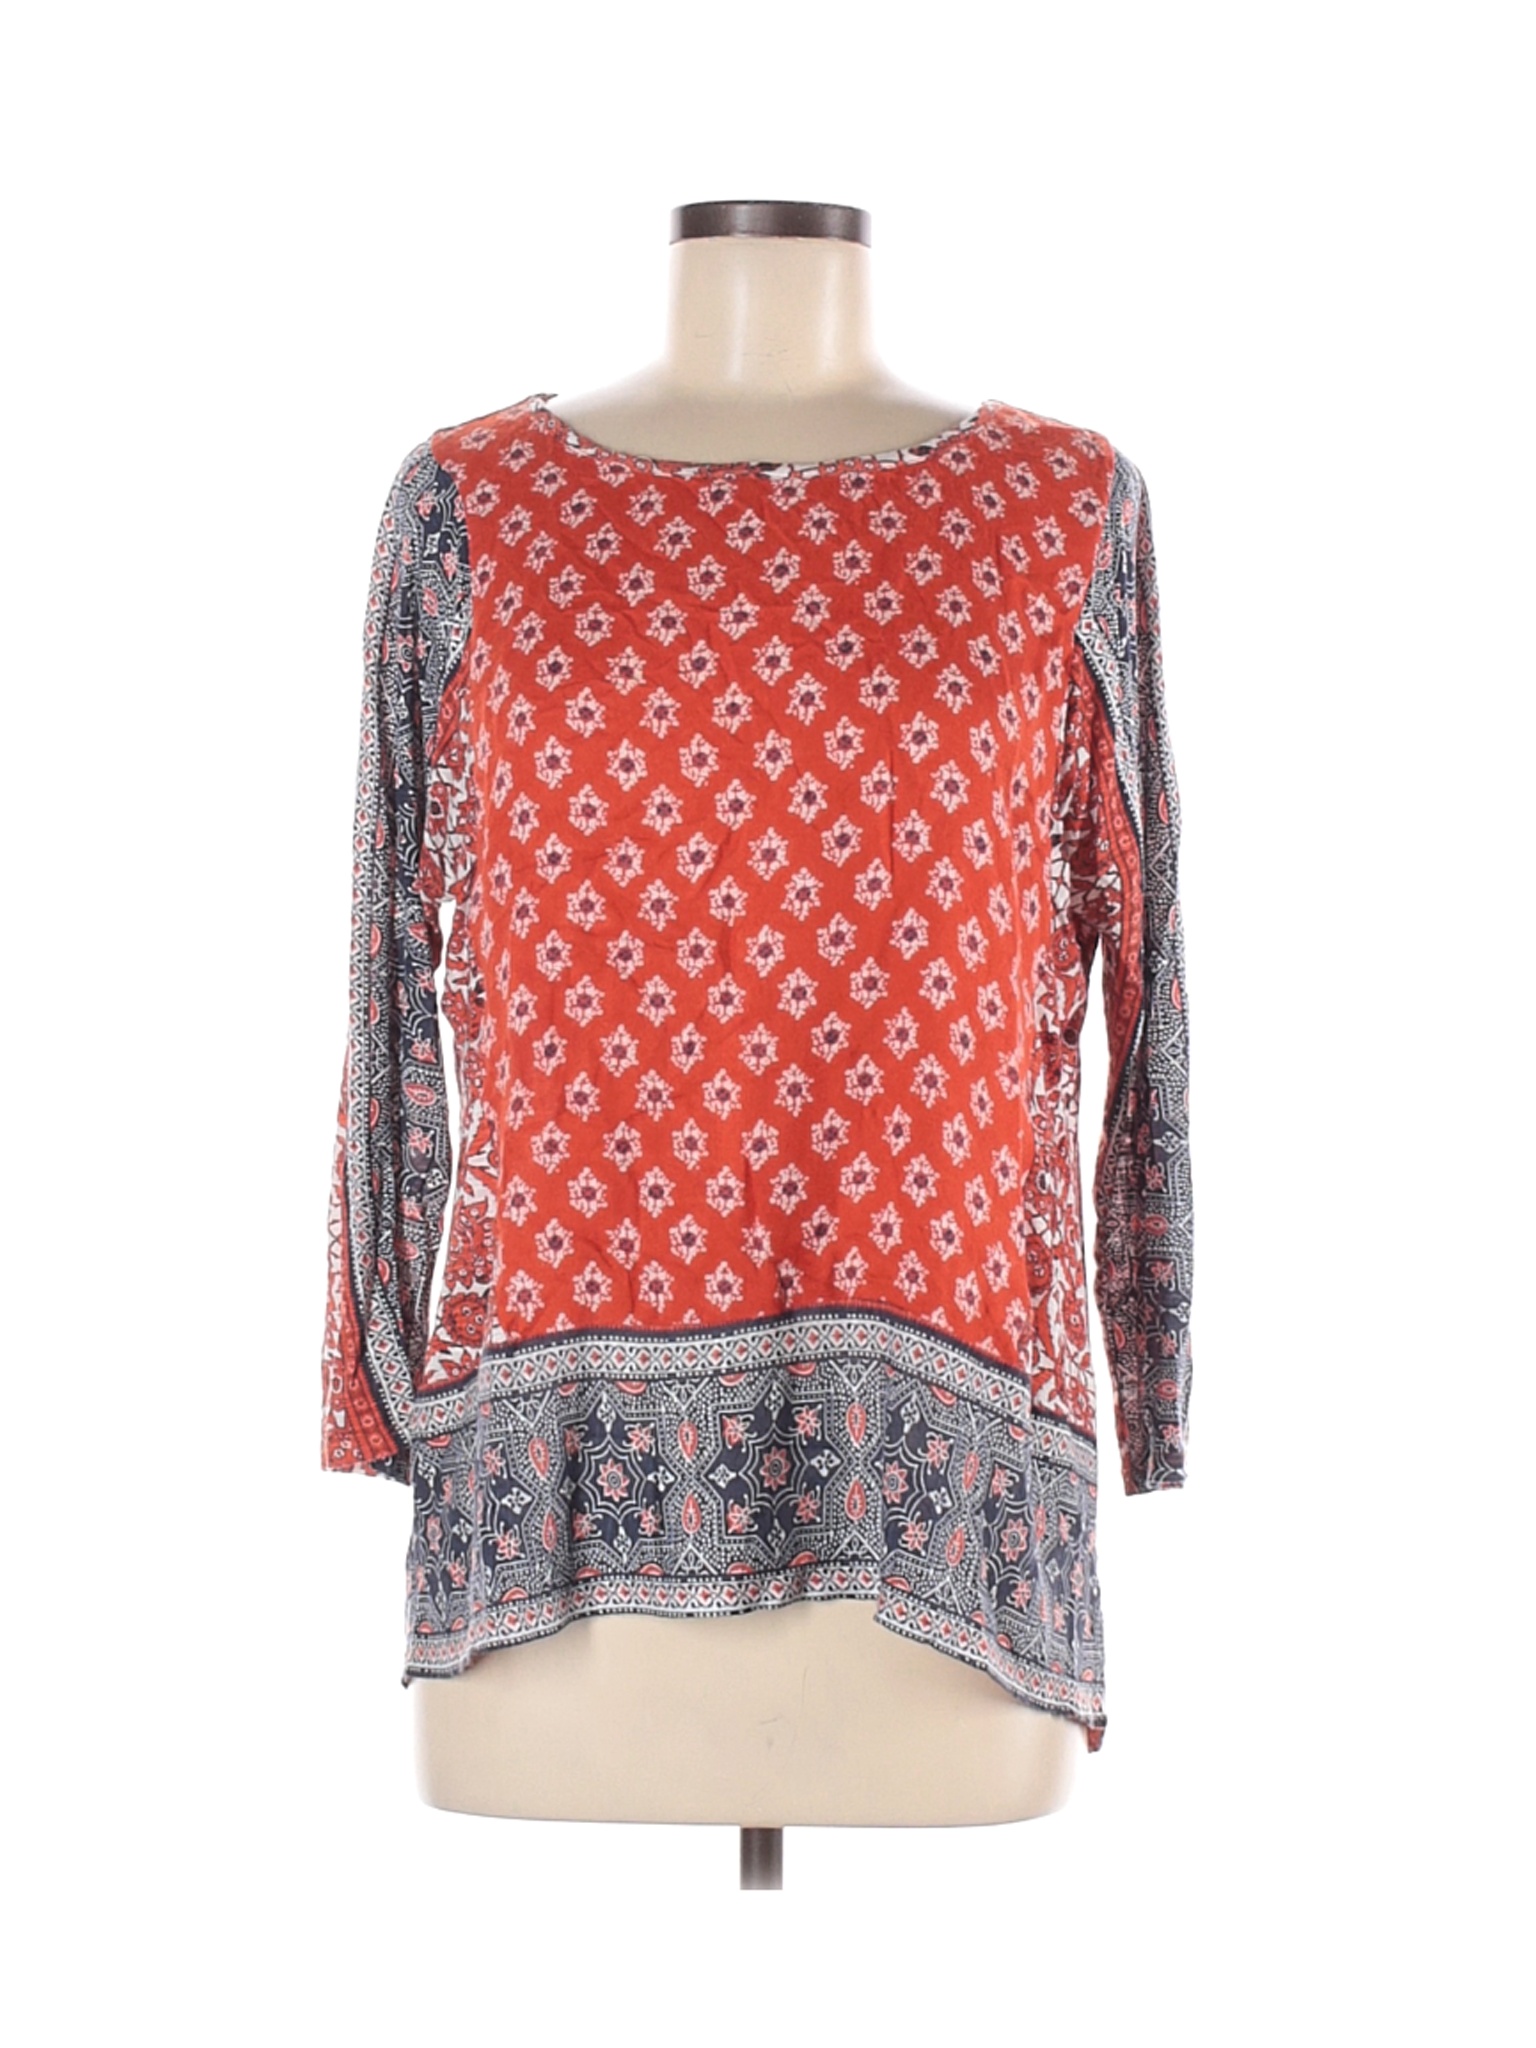 Lucky Brand Women Orange Long Sleeve Top M | eBay